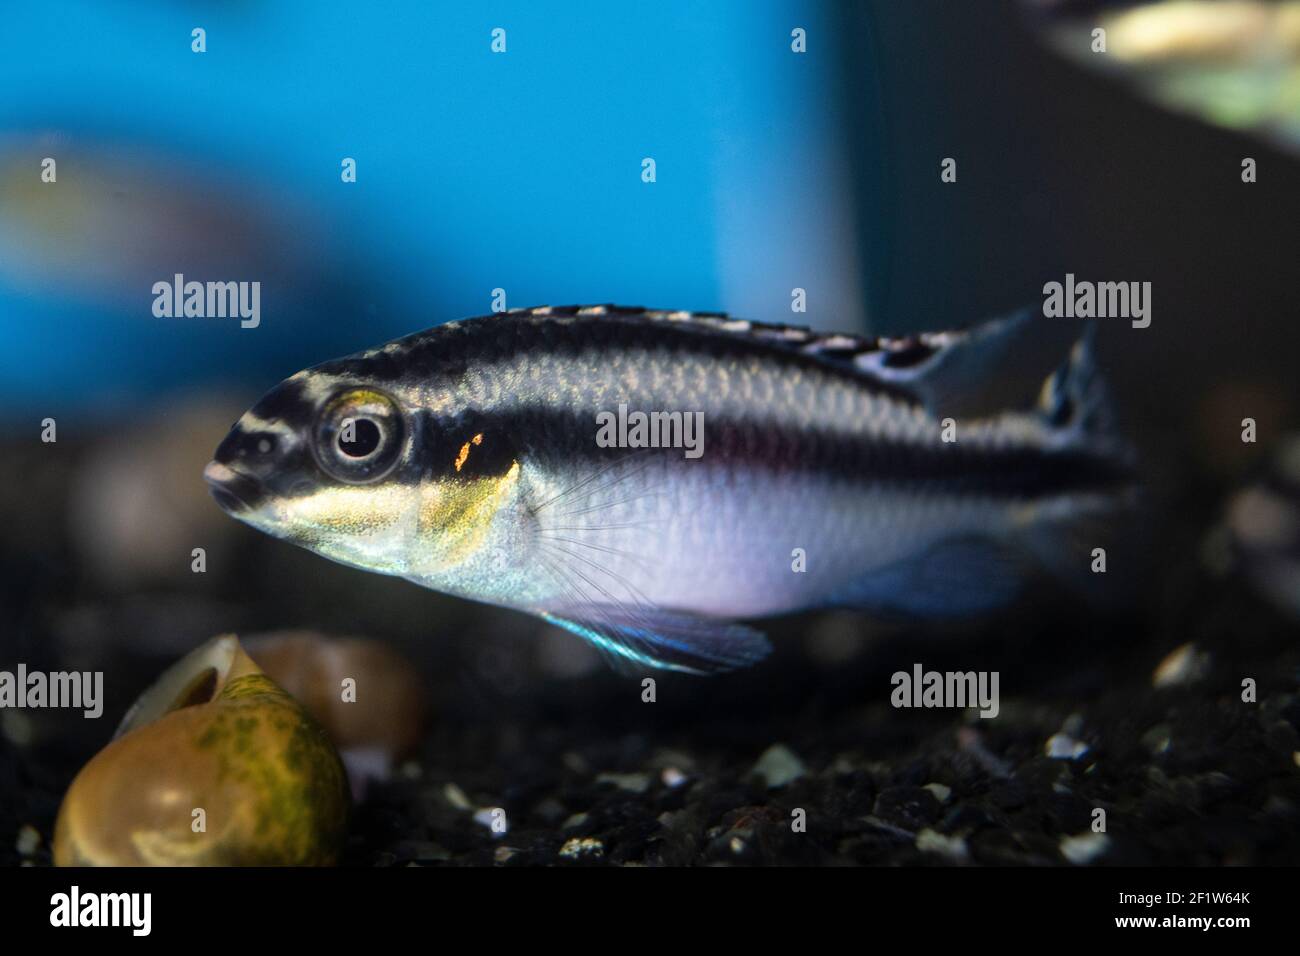 Pelvicachromis pulcher, Kribensis, Aquarium fish from lake Niger, Africa Stock Photo